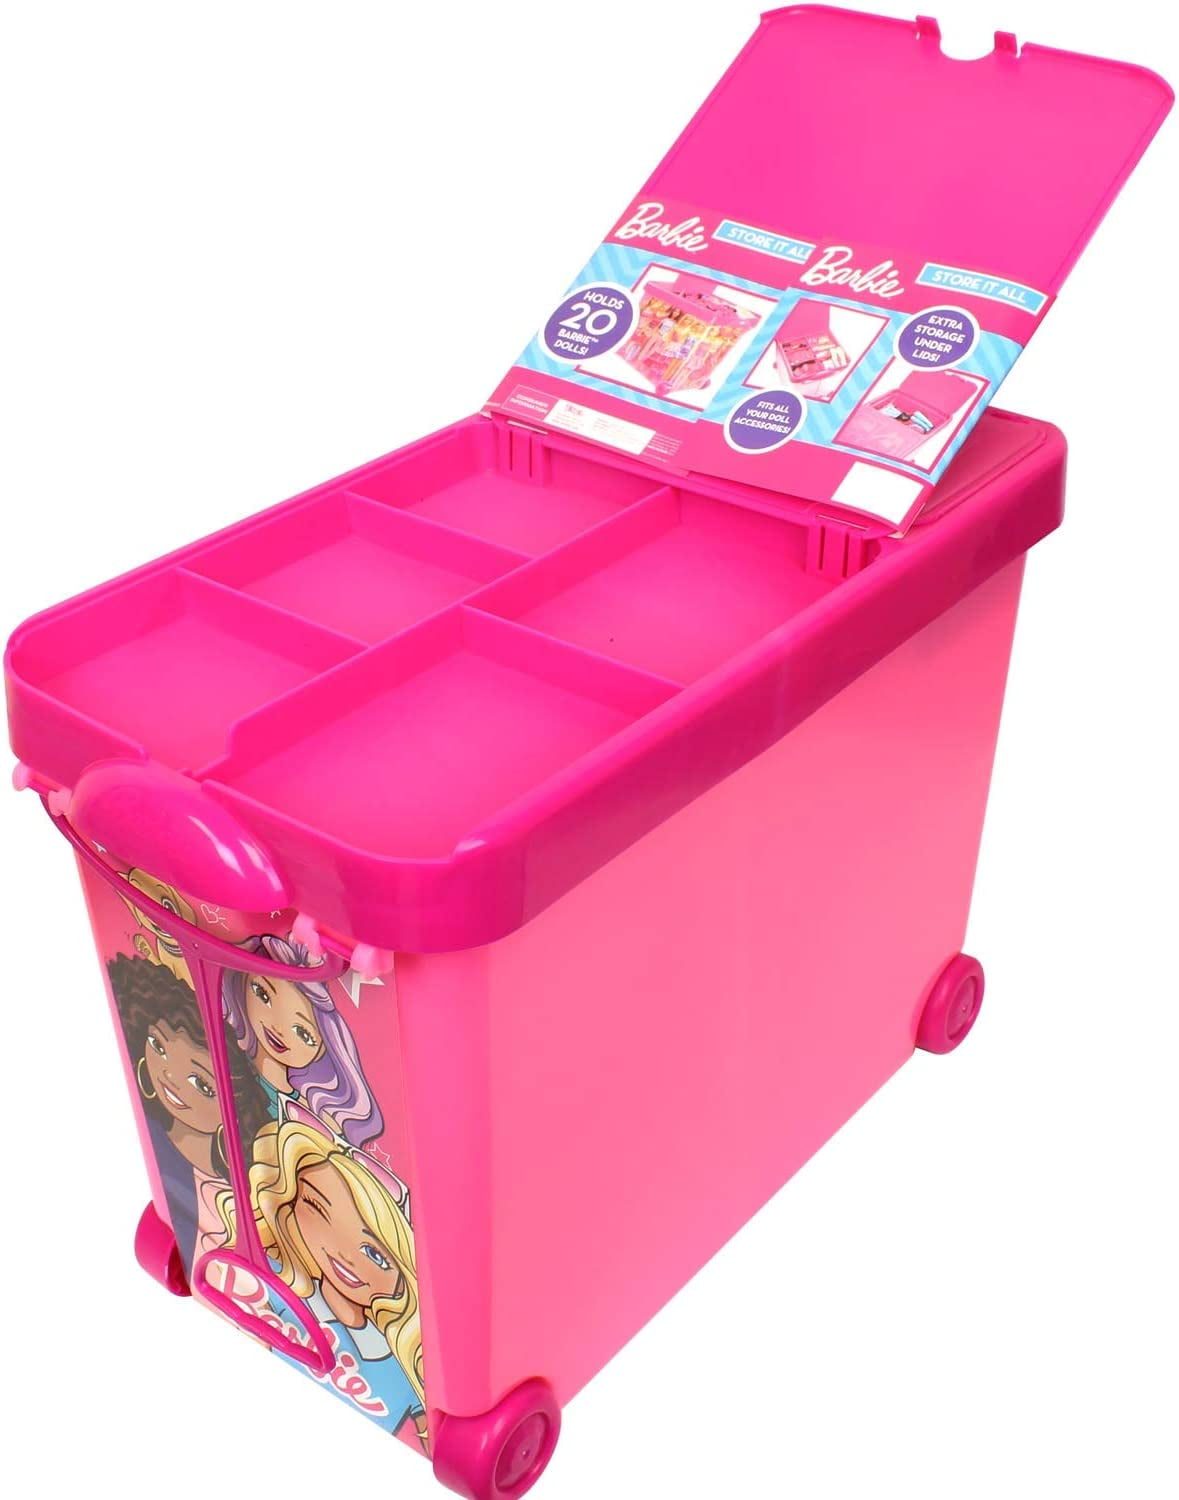 Barbie Pink Wagon w/ Pull Handle 9”x13”x18” Storage Compartments Organizer